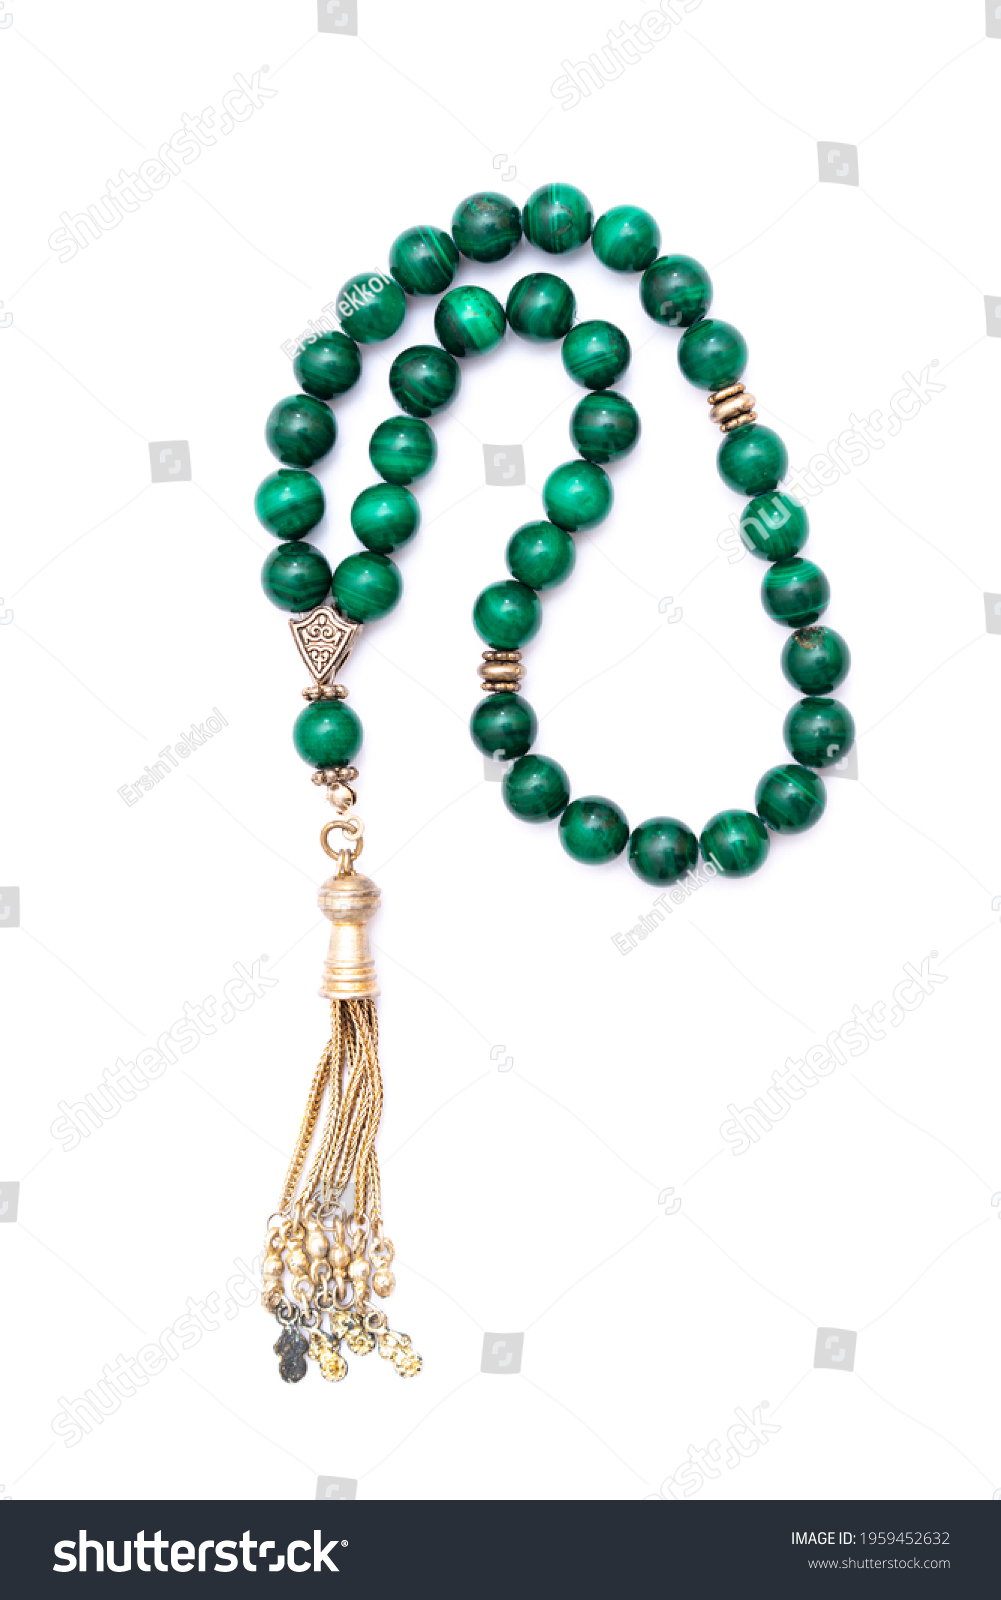 Muslim prayer rosary beads isolated on white background. #1959452632